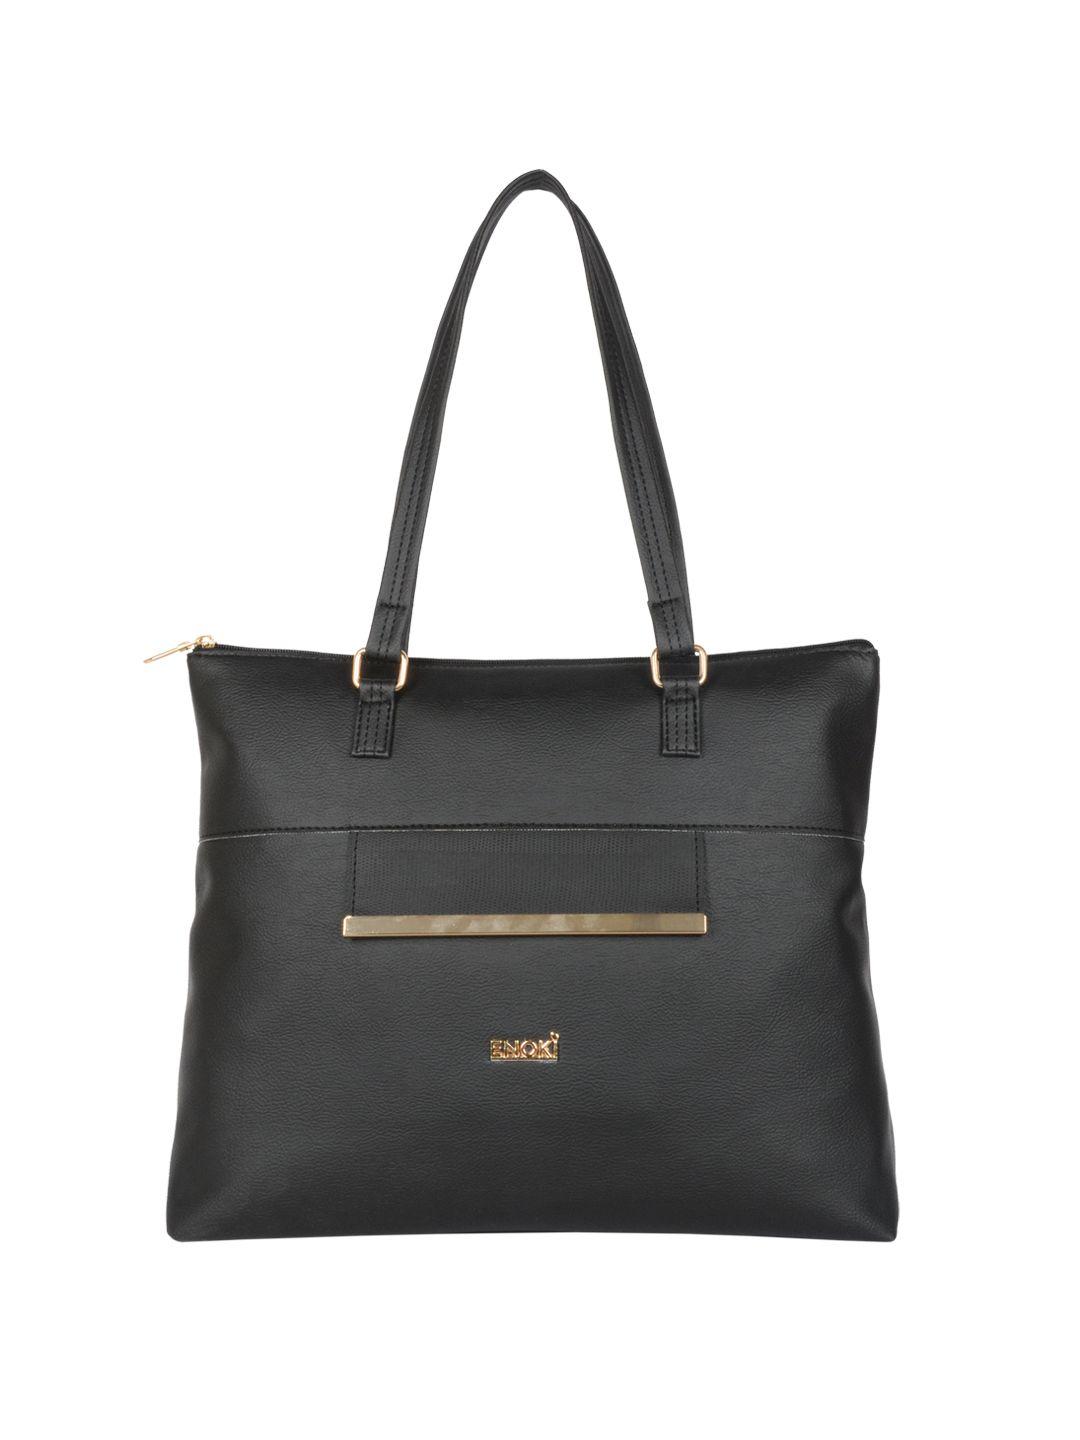 enoki-women-black-shopper-tote-bag-with-tasselled